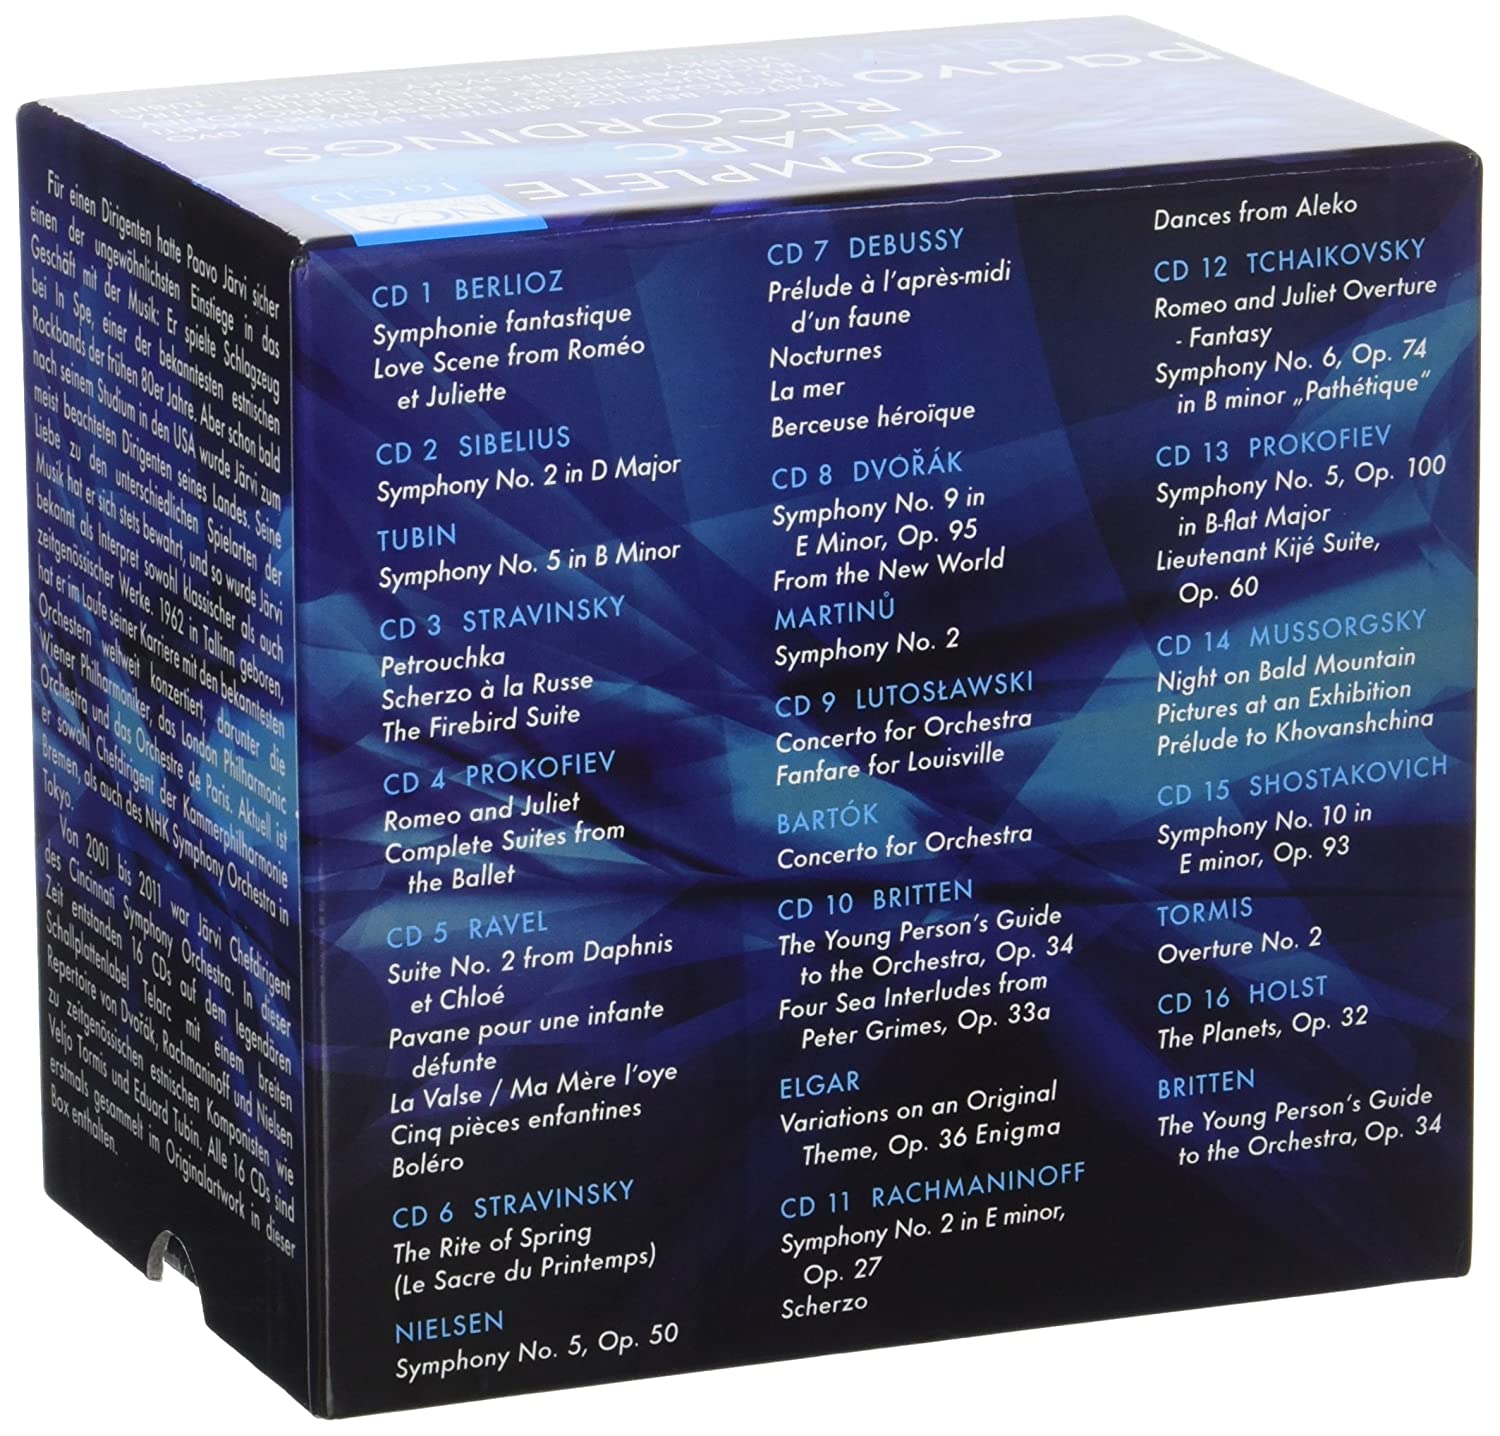 PAAVO JARVI & CINCINNATI SYMPHONY ORCHESTRA: The COMPLETE TELARC RECORDINGS  (16 CDS)